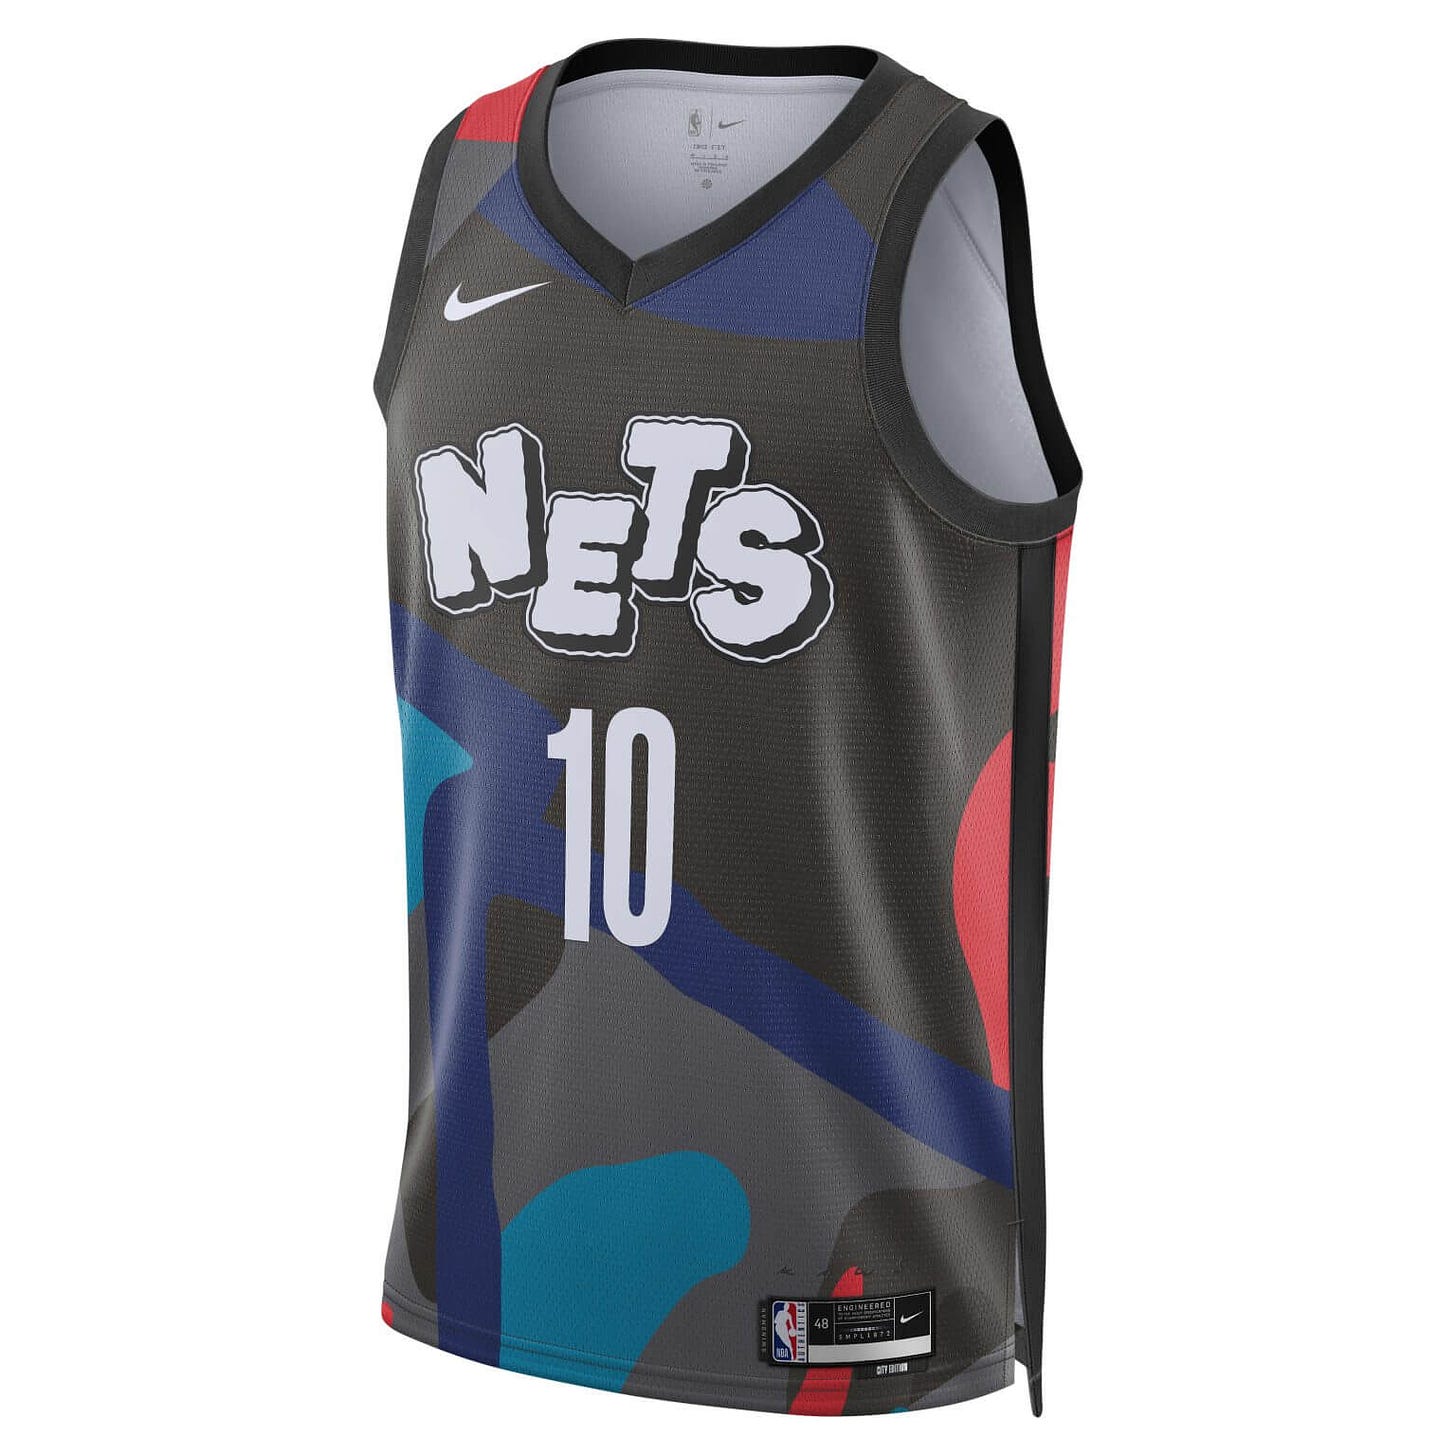 Utah Jazz 2020-21 City Edition jersey reveal 